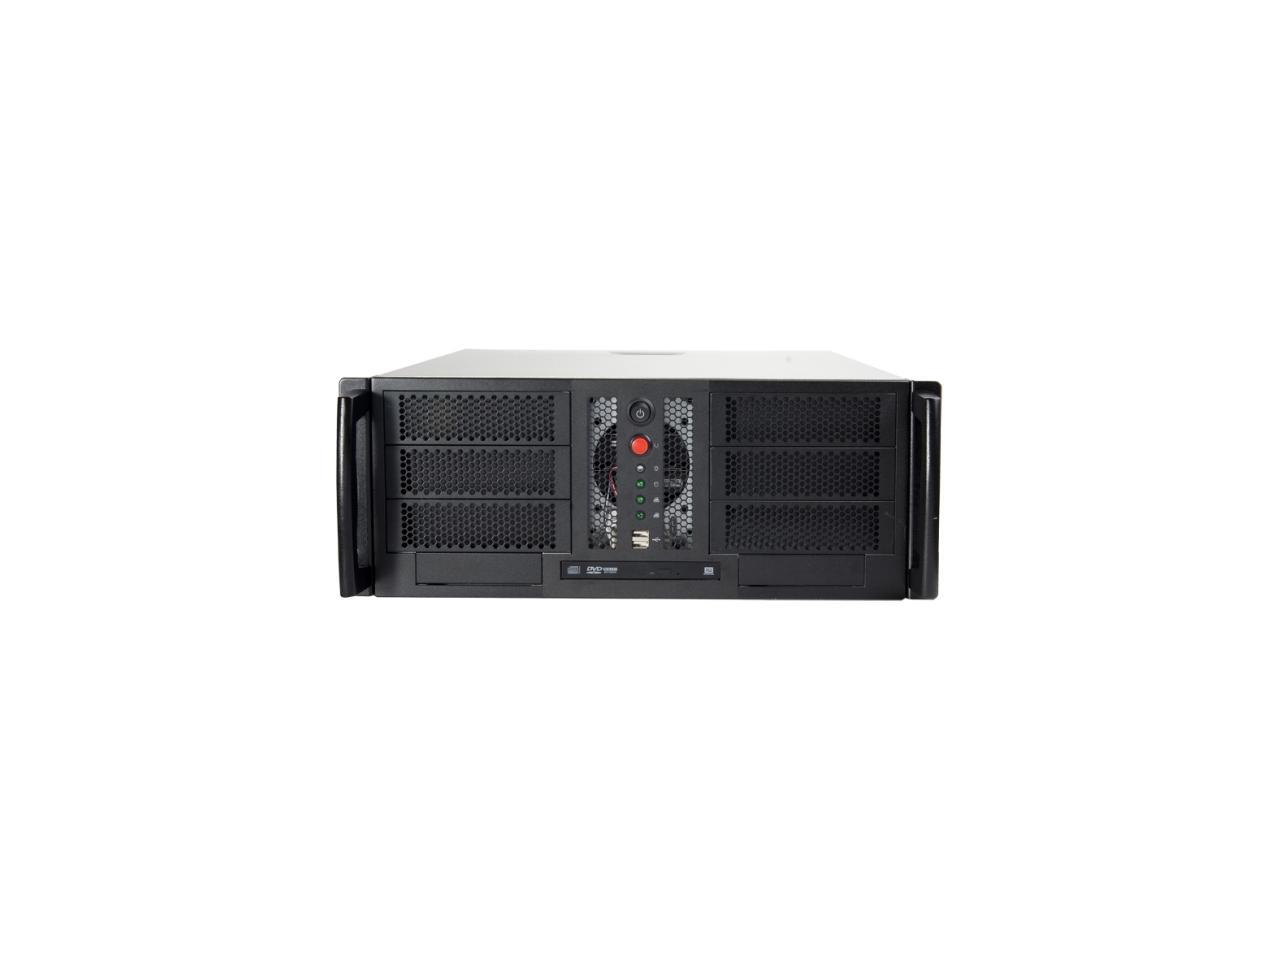 Chenbro Rm42300-F1 Black Steel / Plastic 4U Rackmount Server Case 3 External 5.25" Drive Bays